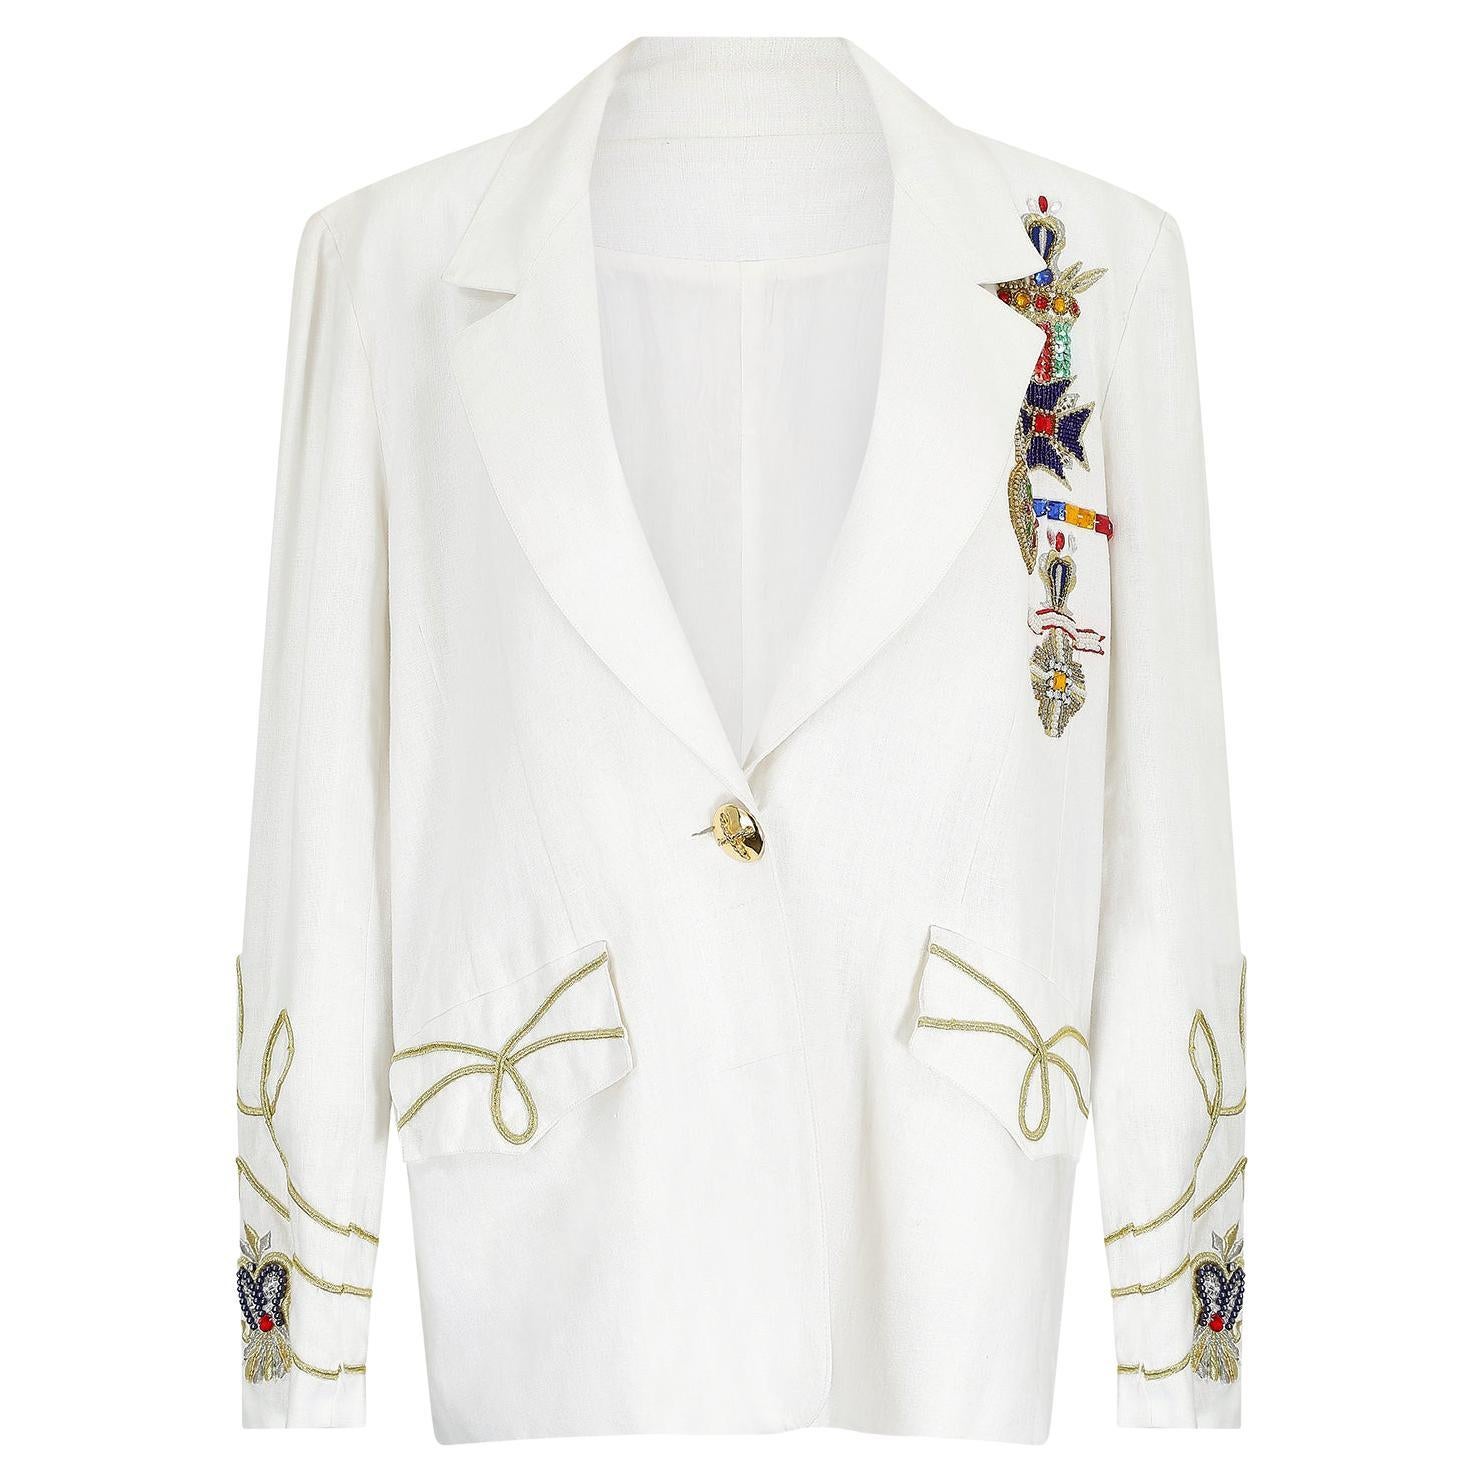 1980s White Linen Novelty Embellished Military Jacket For Sale